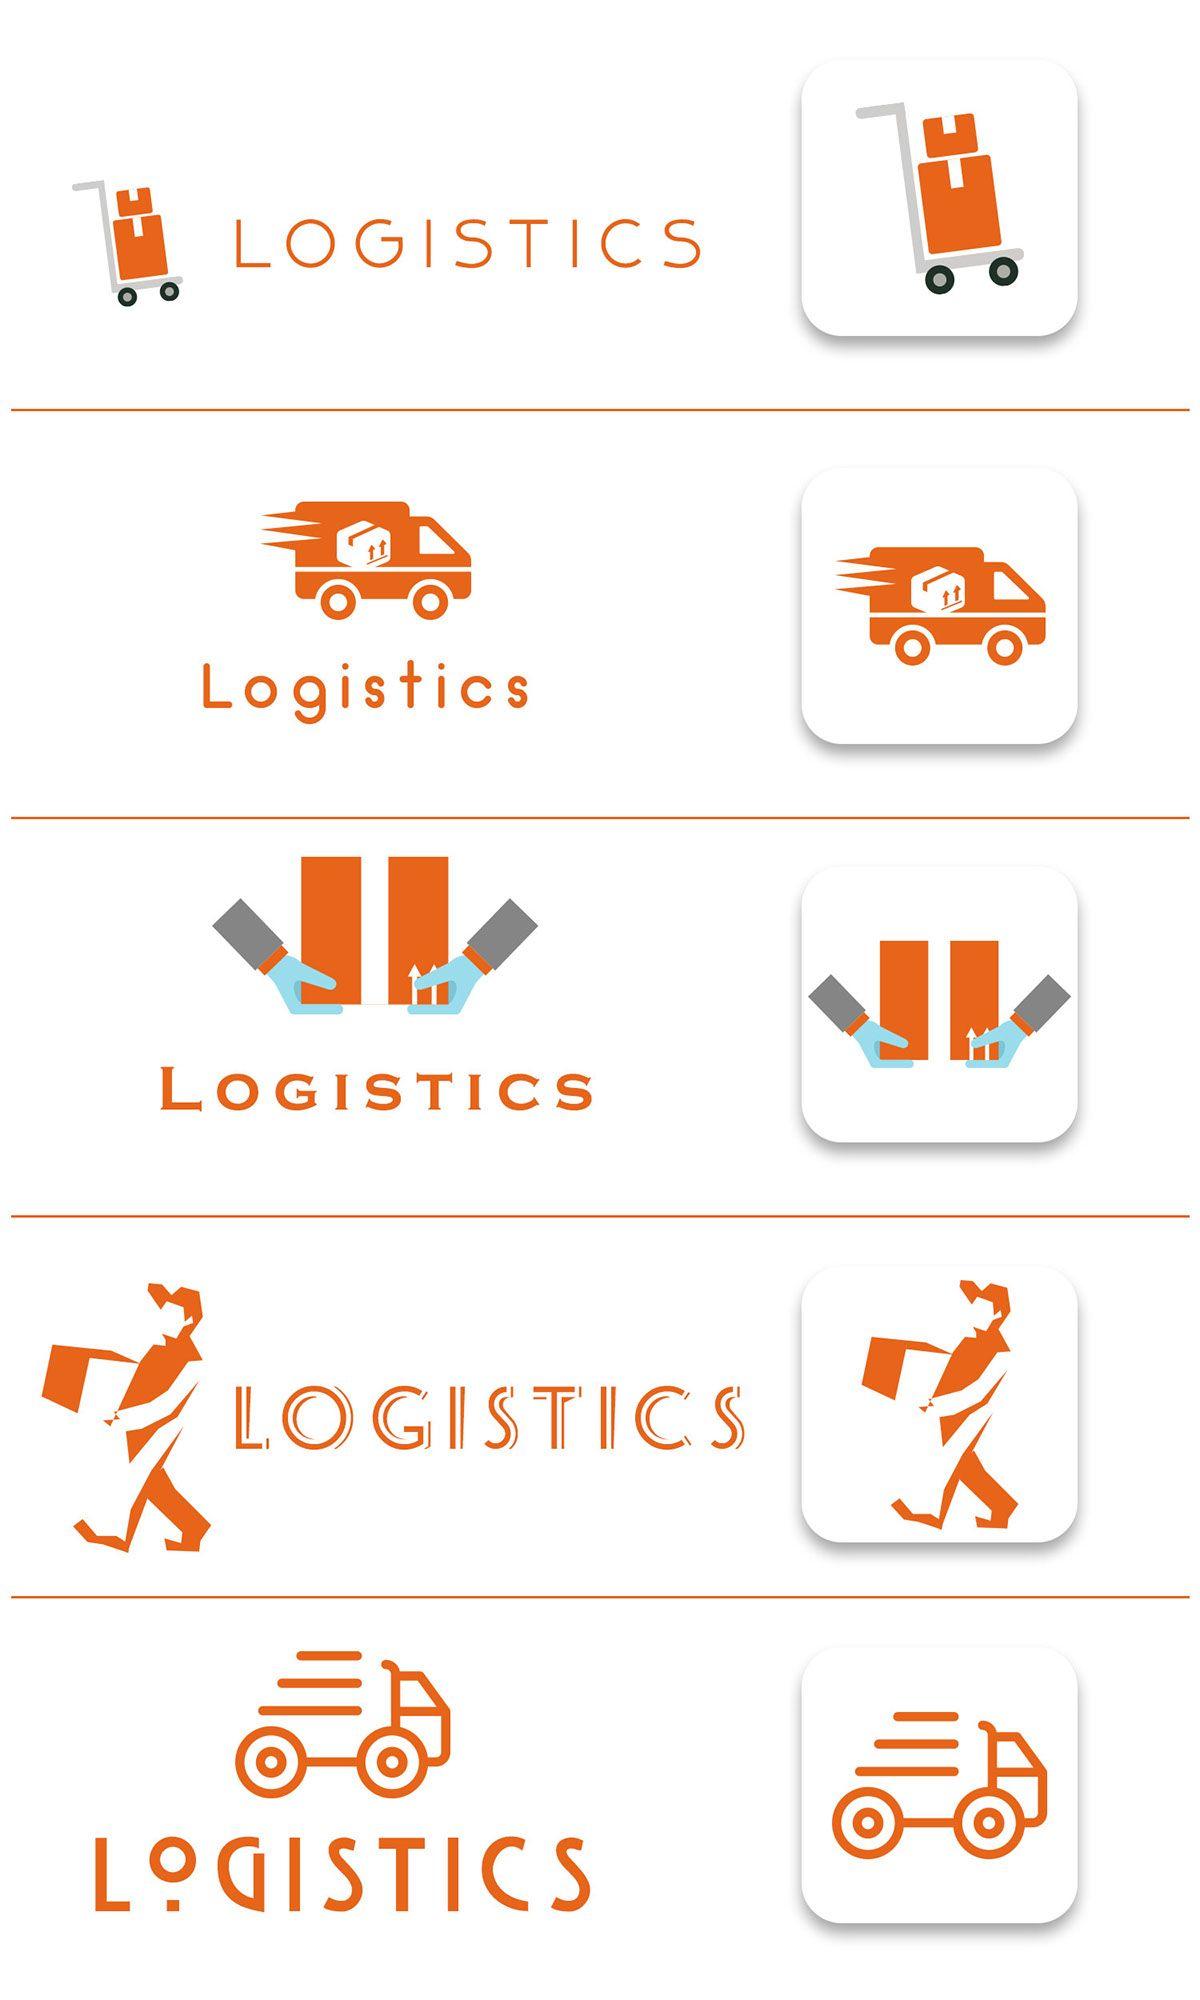 Logistics Company Logo - Logistic Company Logo on Behance | packaging | Pinterest | Logos ...